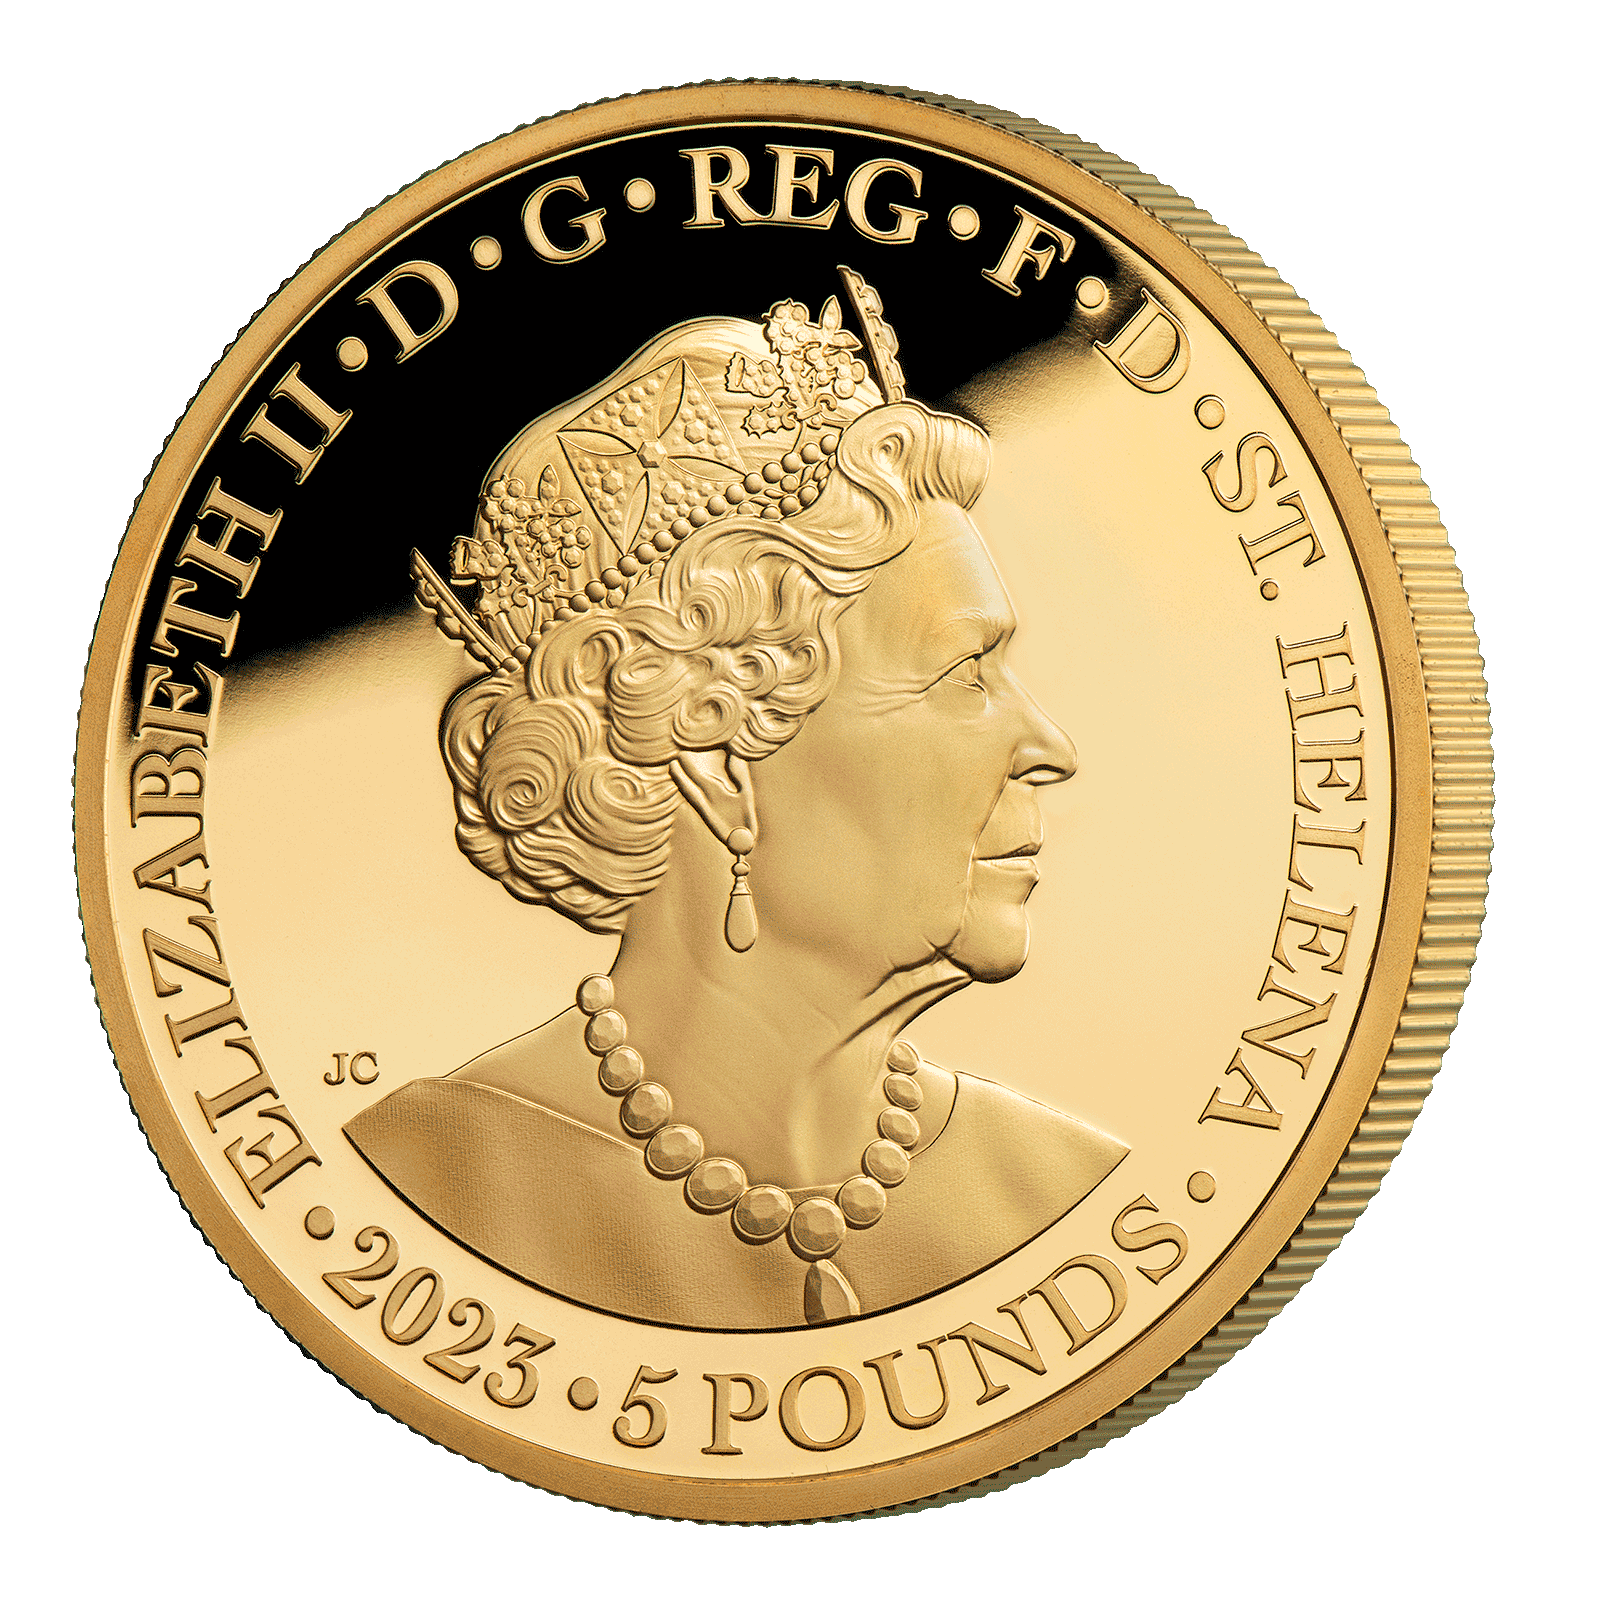 2023 Una & Lion Faerie Queene 2oz Gold Proof Coin